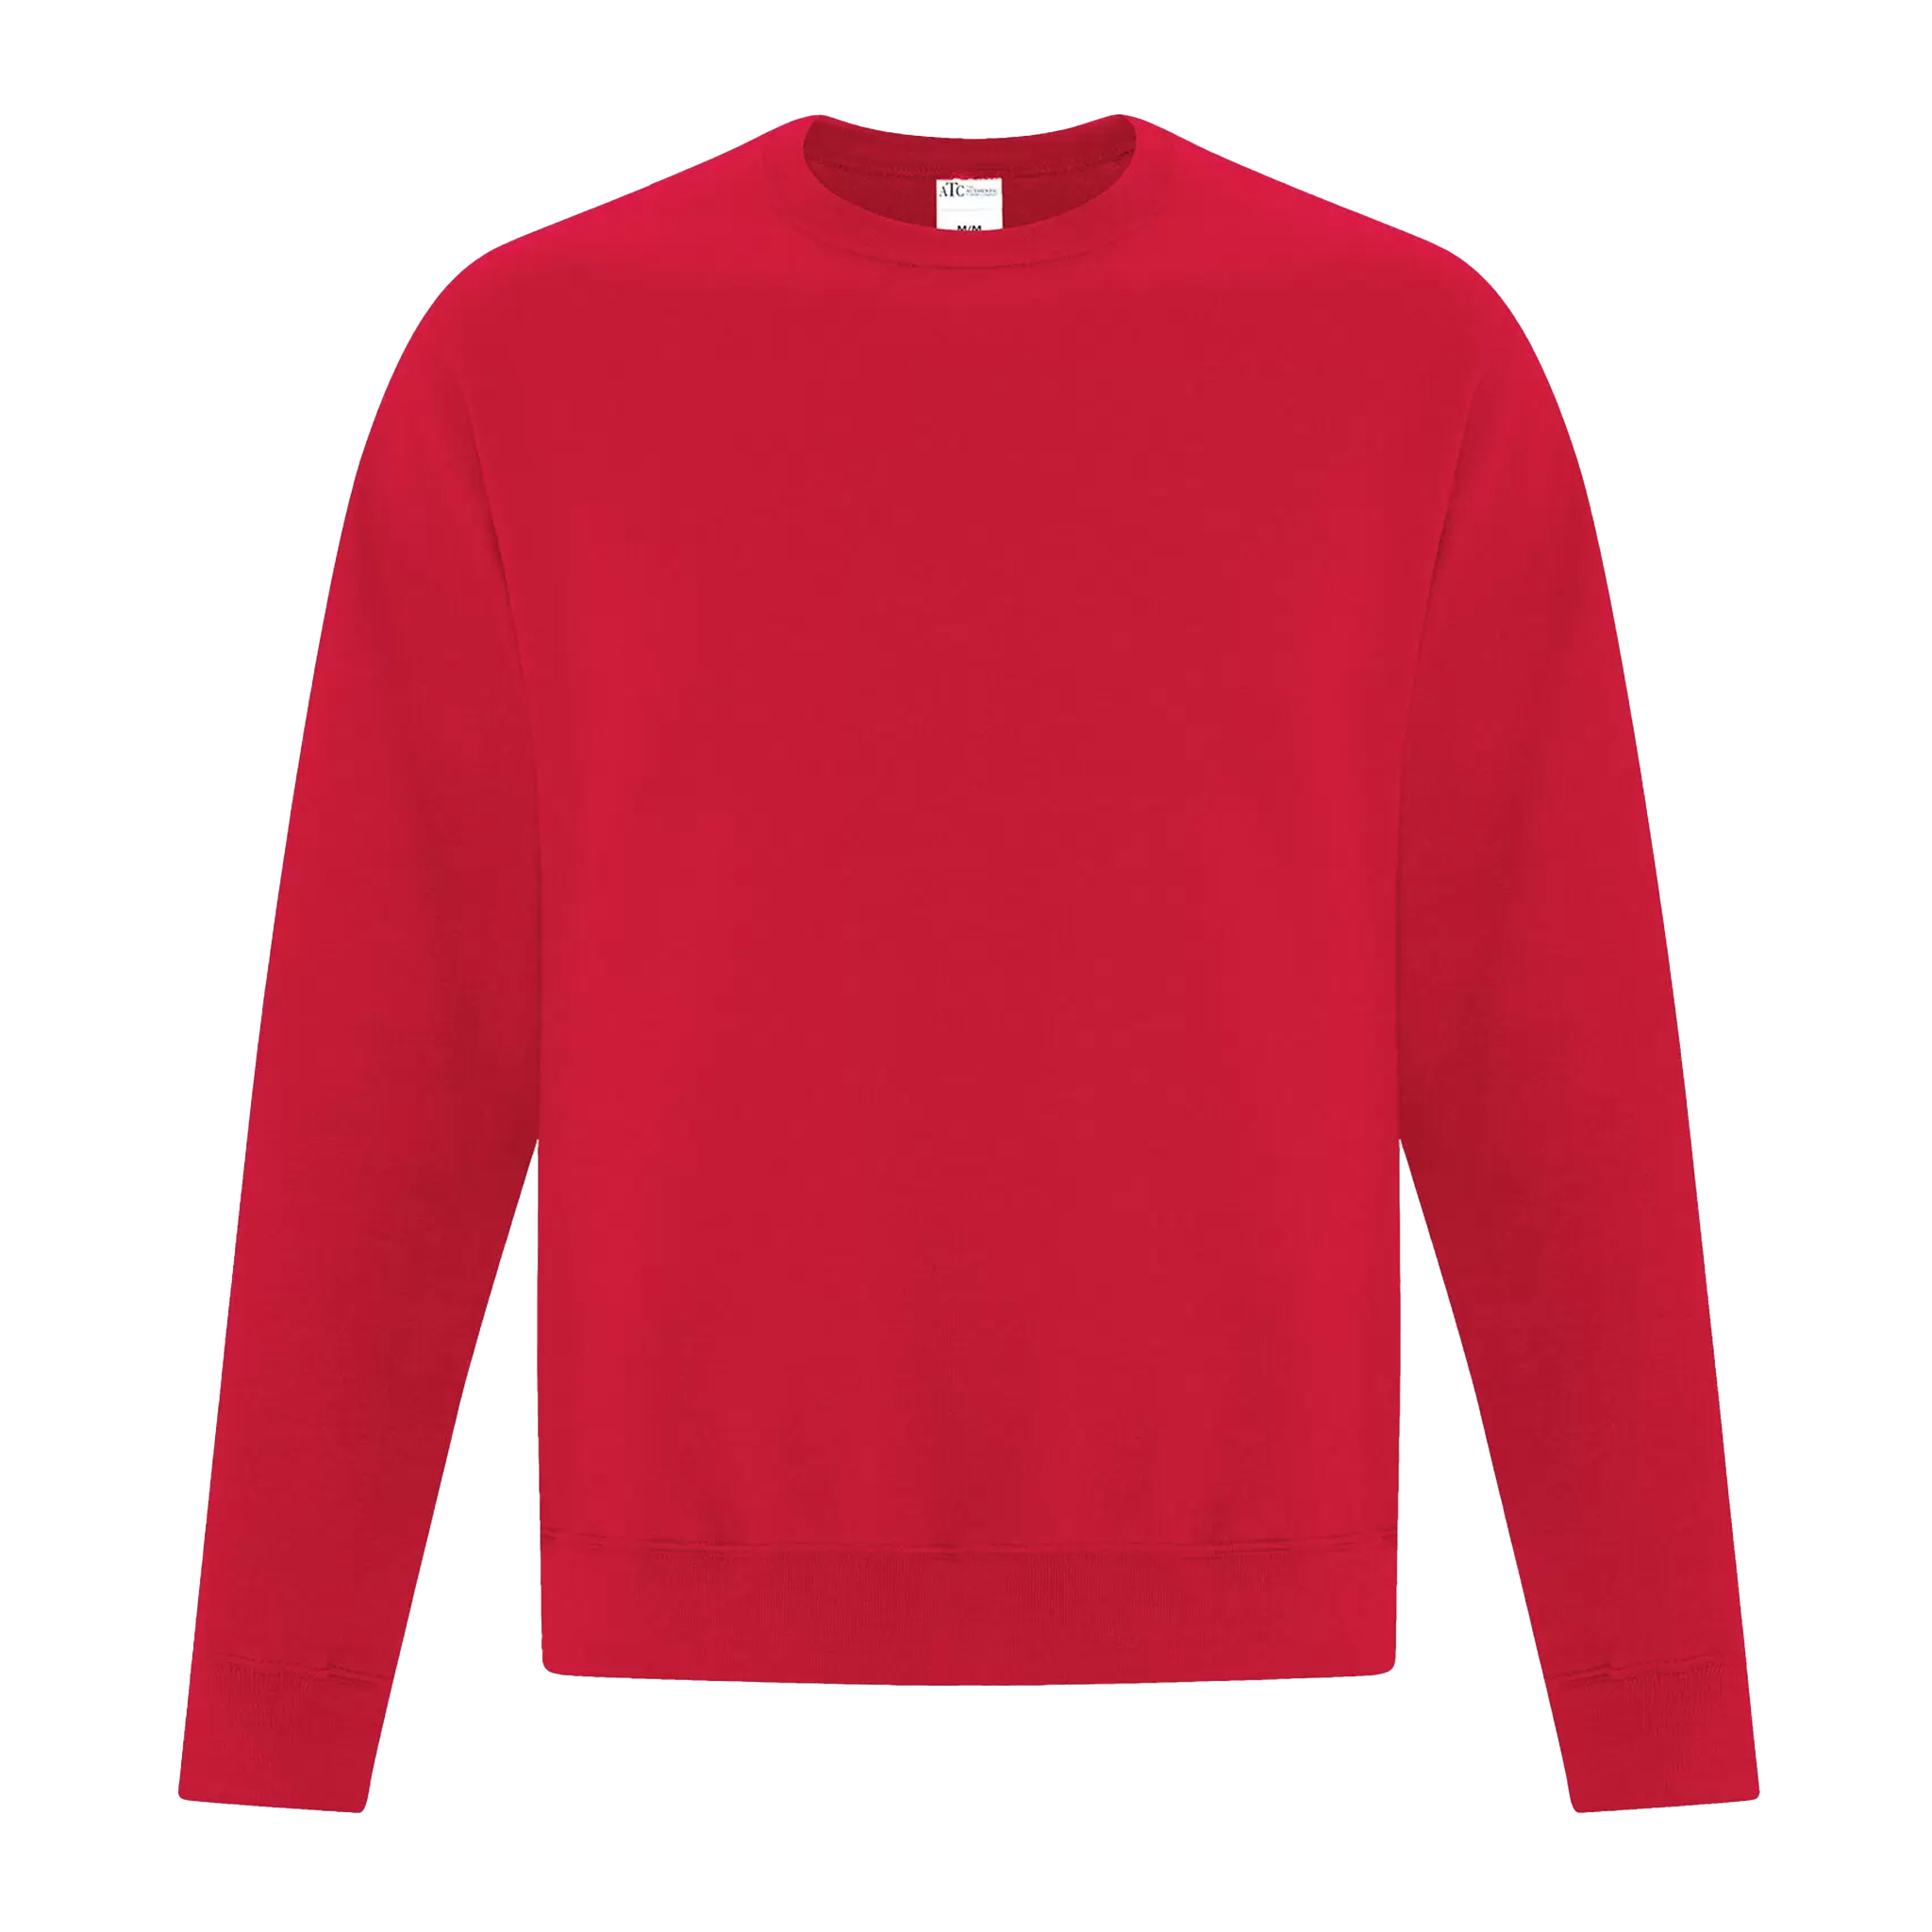 ATC Everyday Fleece Crewneck Sweatshirt - Adult Unisex Sizing S-4XL - Red